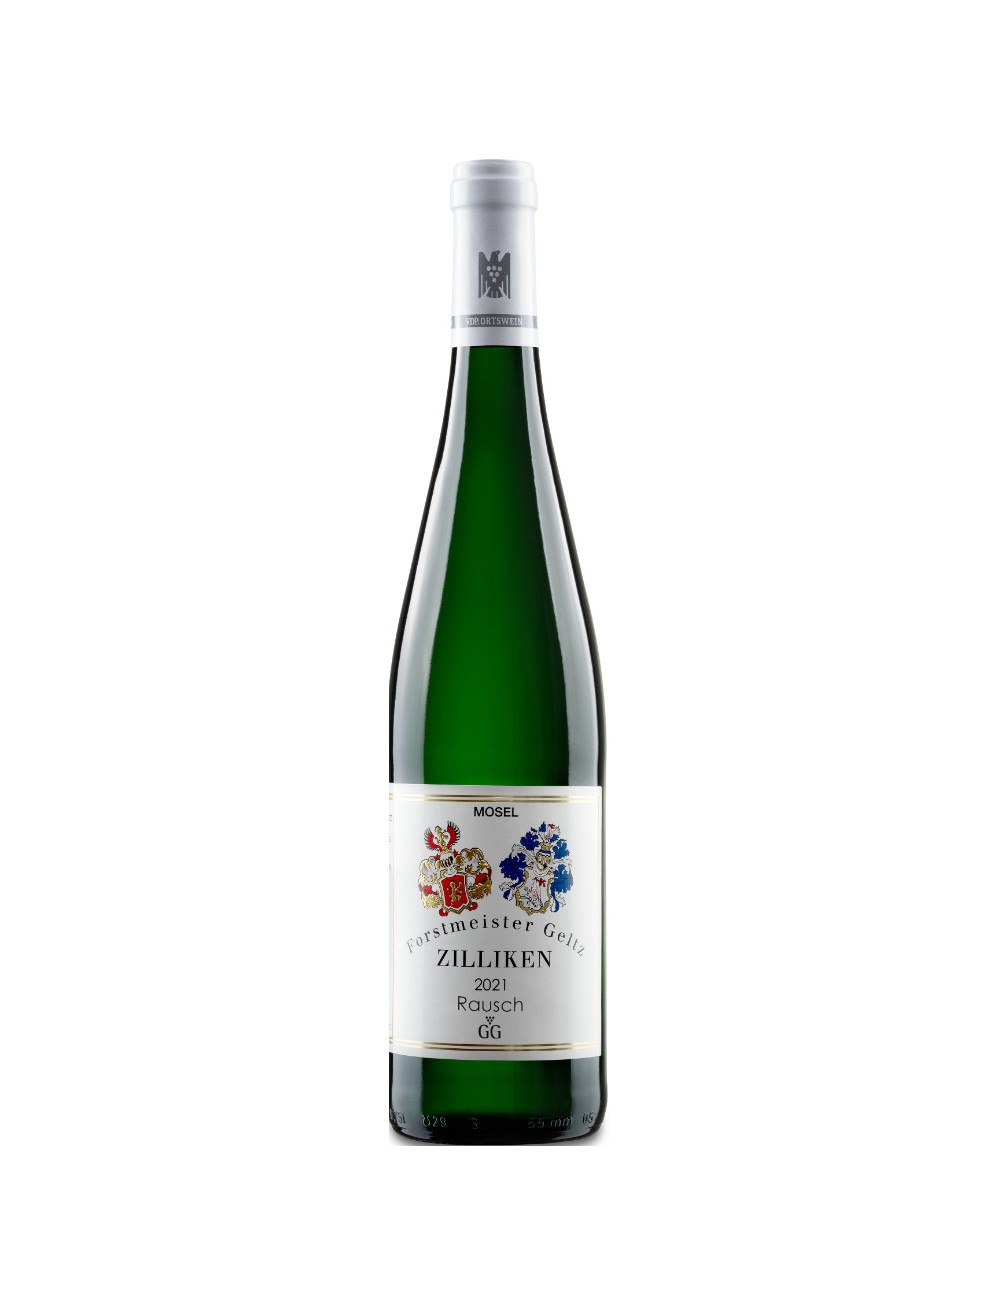 Rausch Grosses Gewächs (Grand Cru) shipping, Geltz-Zilliken Free Forstmeister dry in Riesling online. Saarburg Winery 2022 from